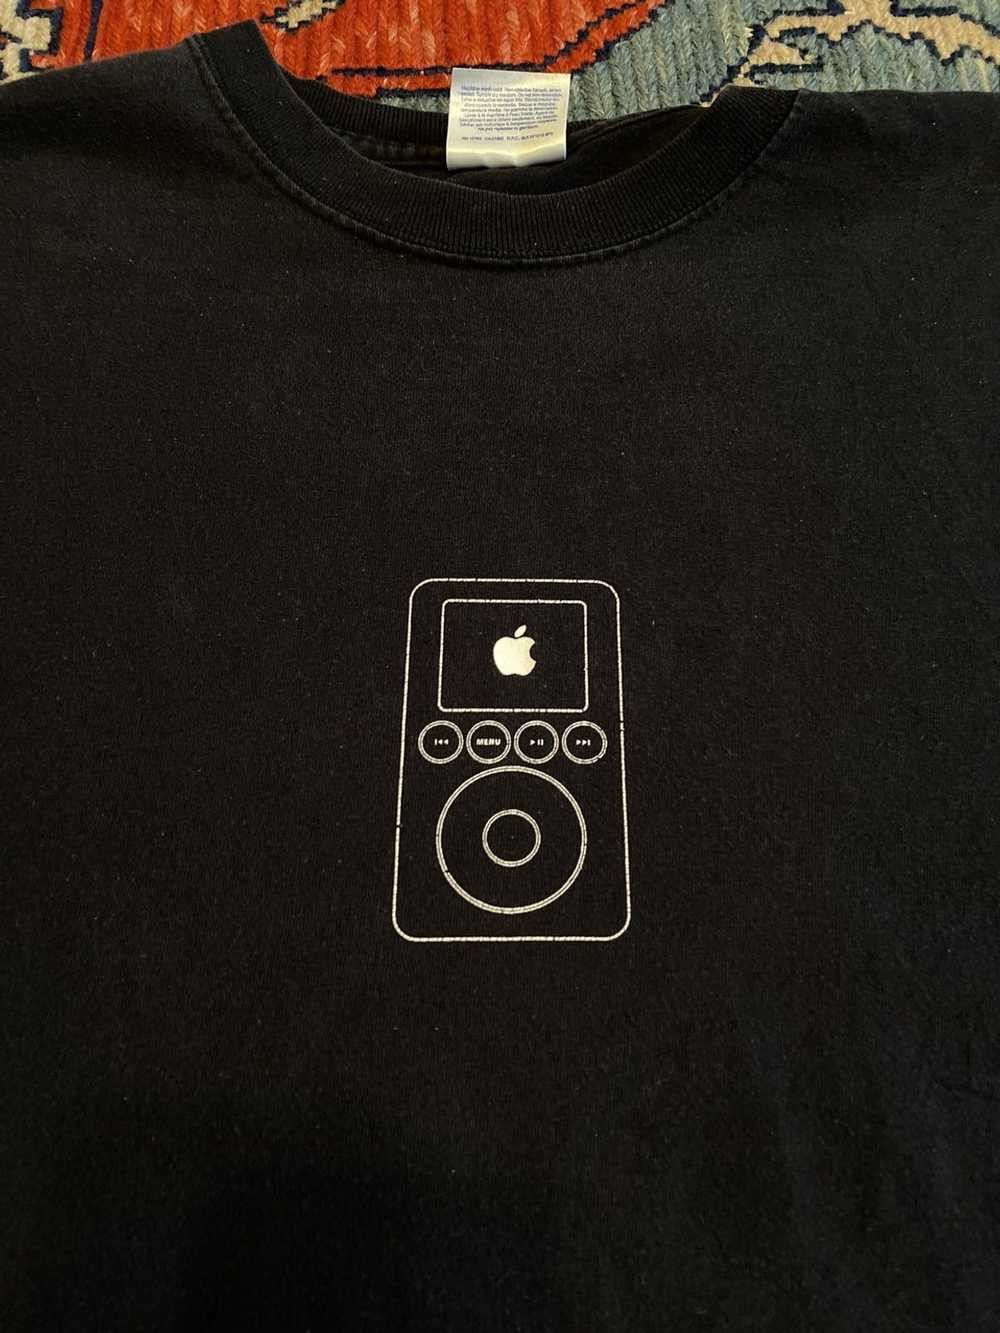 Vintage 2003 Apple iPod T-shirt - image 2